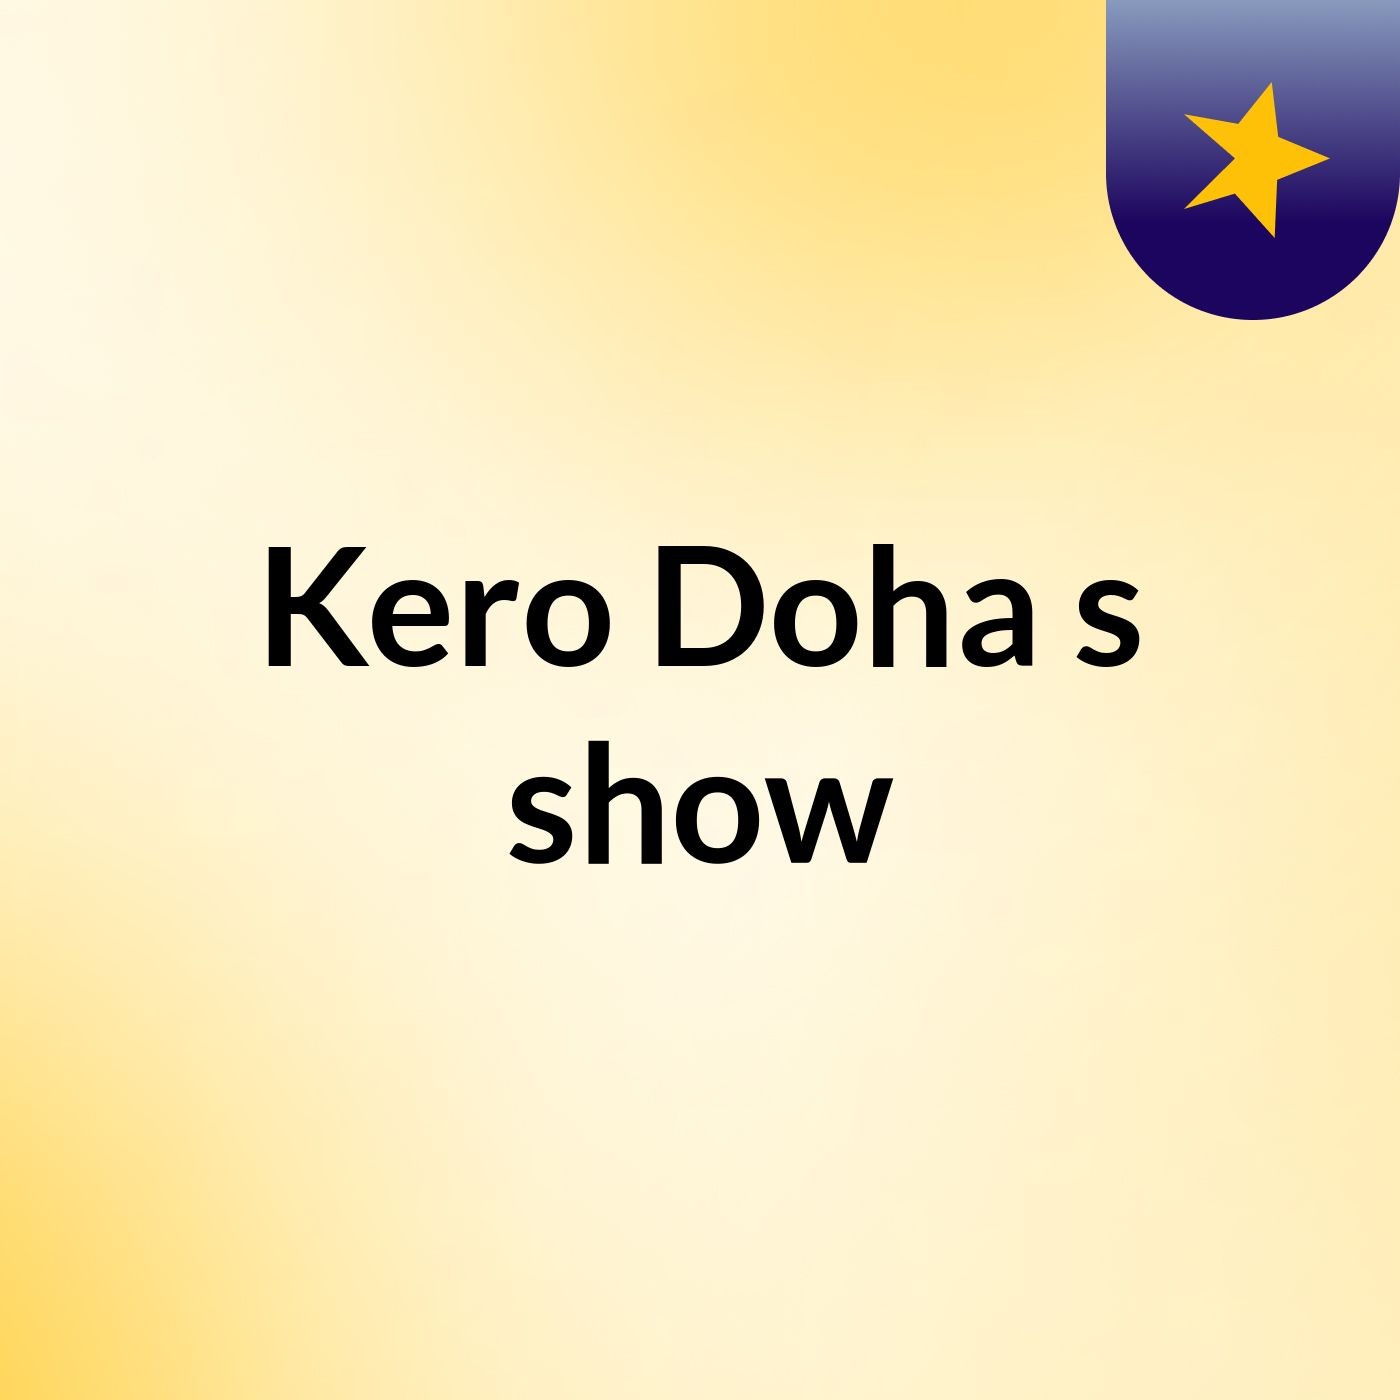 Kero Doha's show